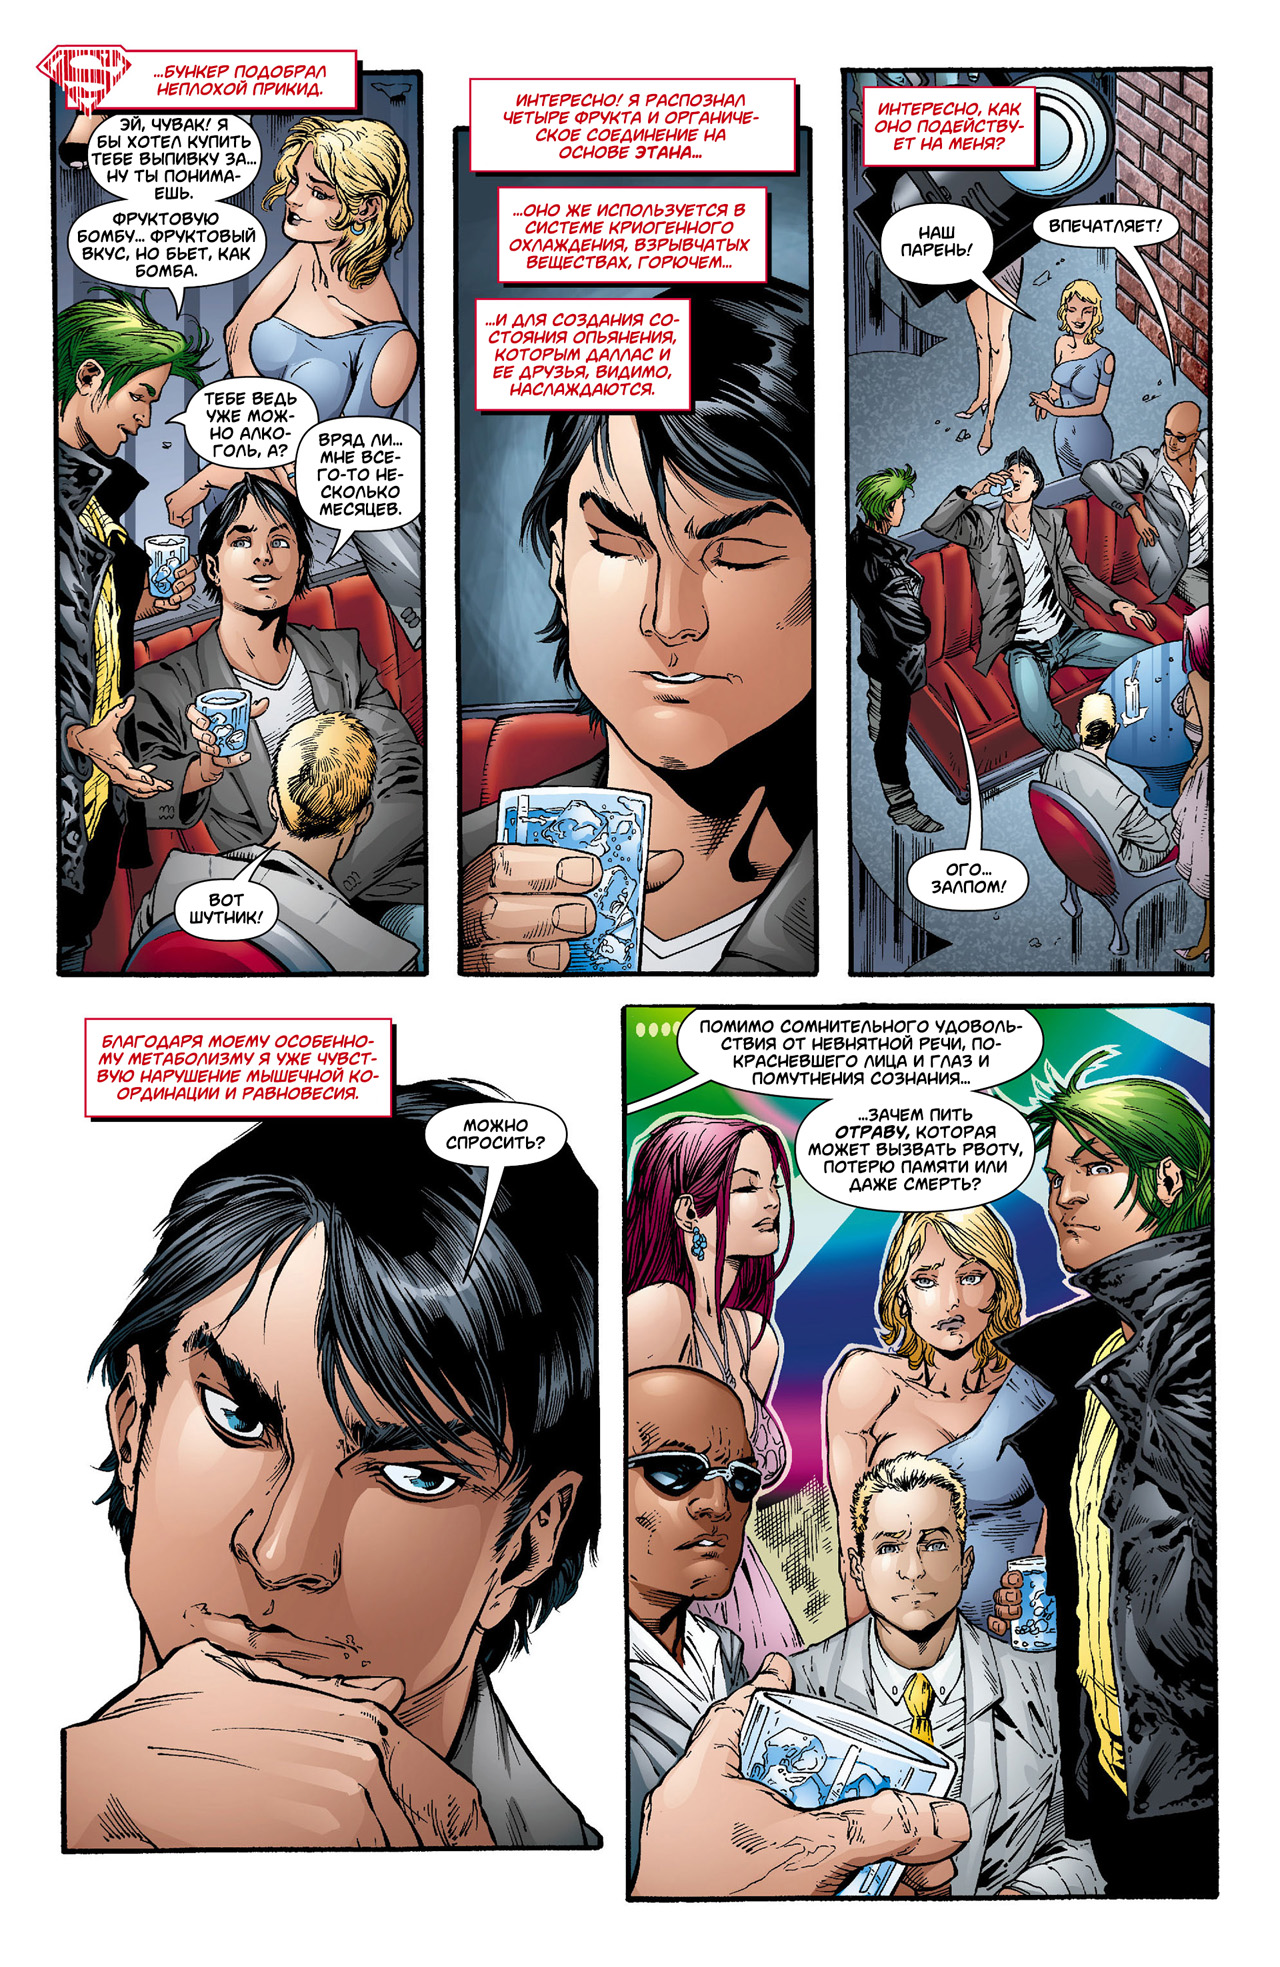 Superboy-12-pg-006.jpg